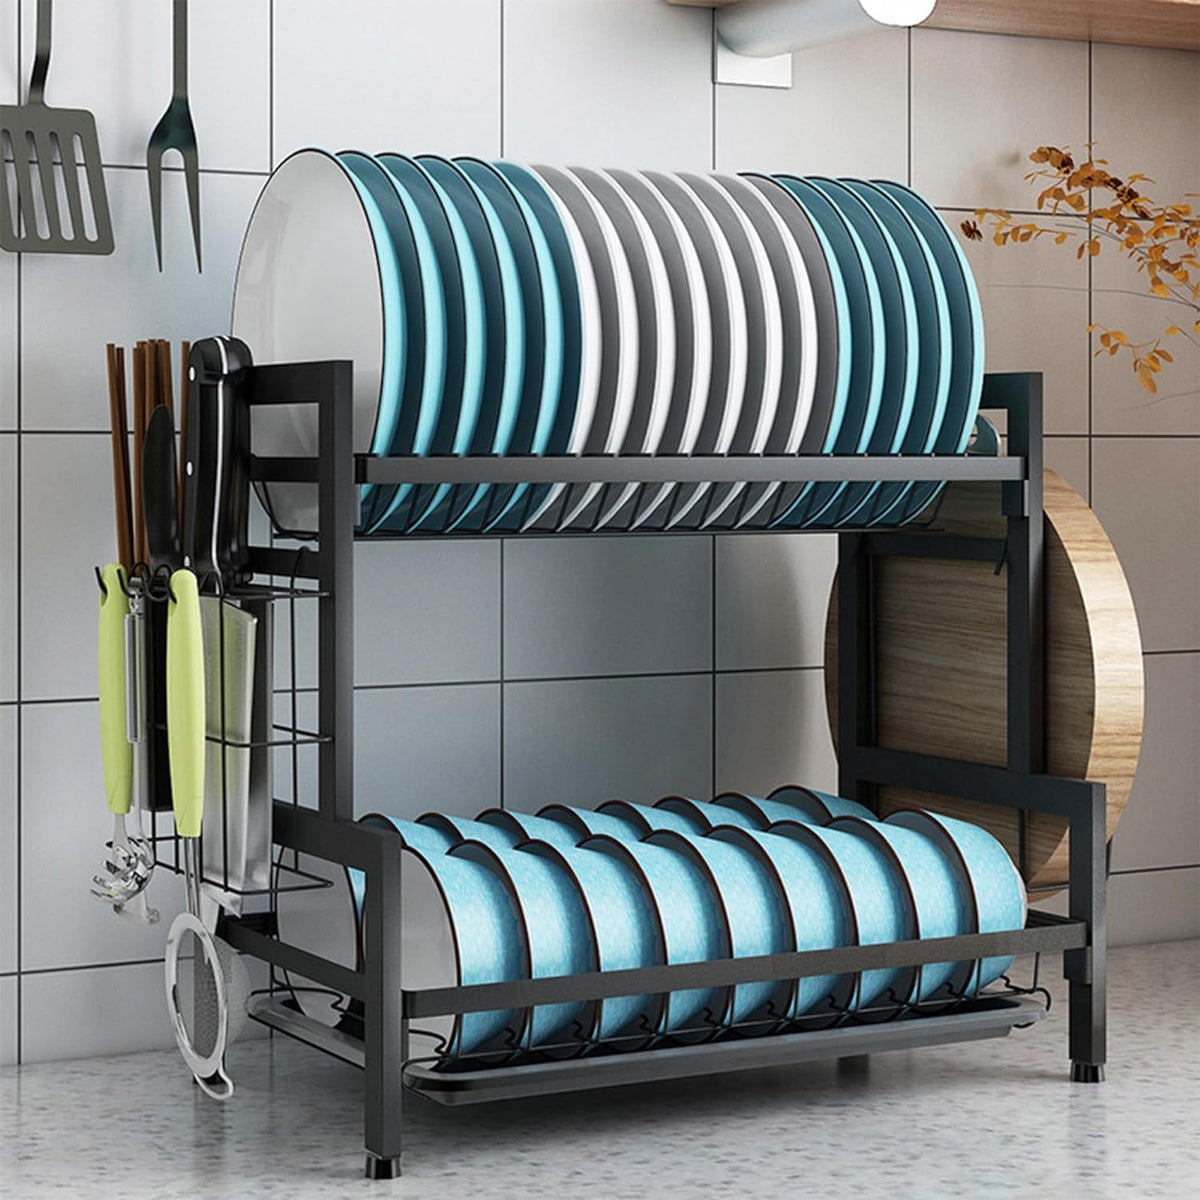 Plantex 2-Layer Dish Drying Rack|Storage Rack for Kitchen Counter|Drainboard & Cutting Board Holder|Premium Utensils Basket|Free Mounting (Black)